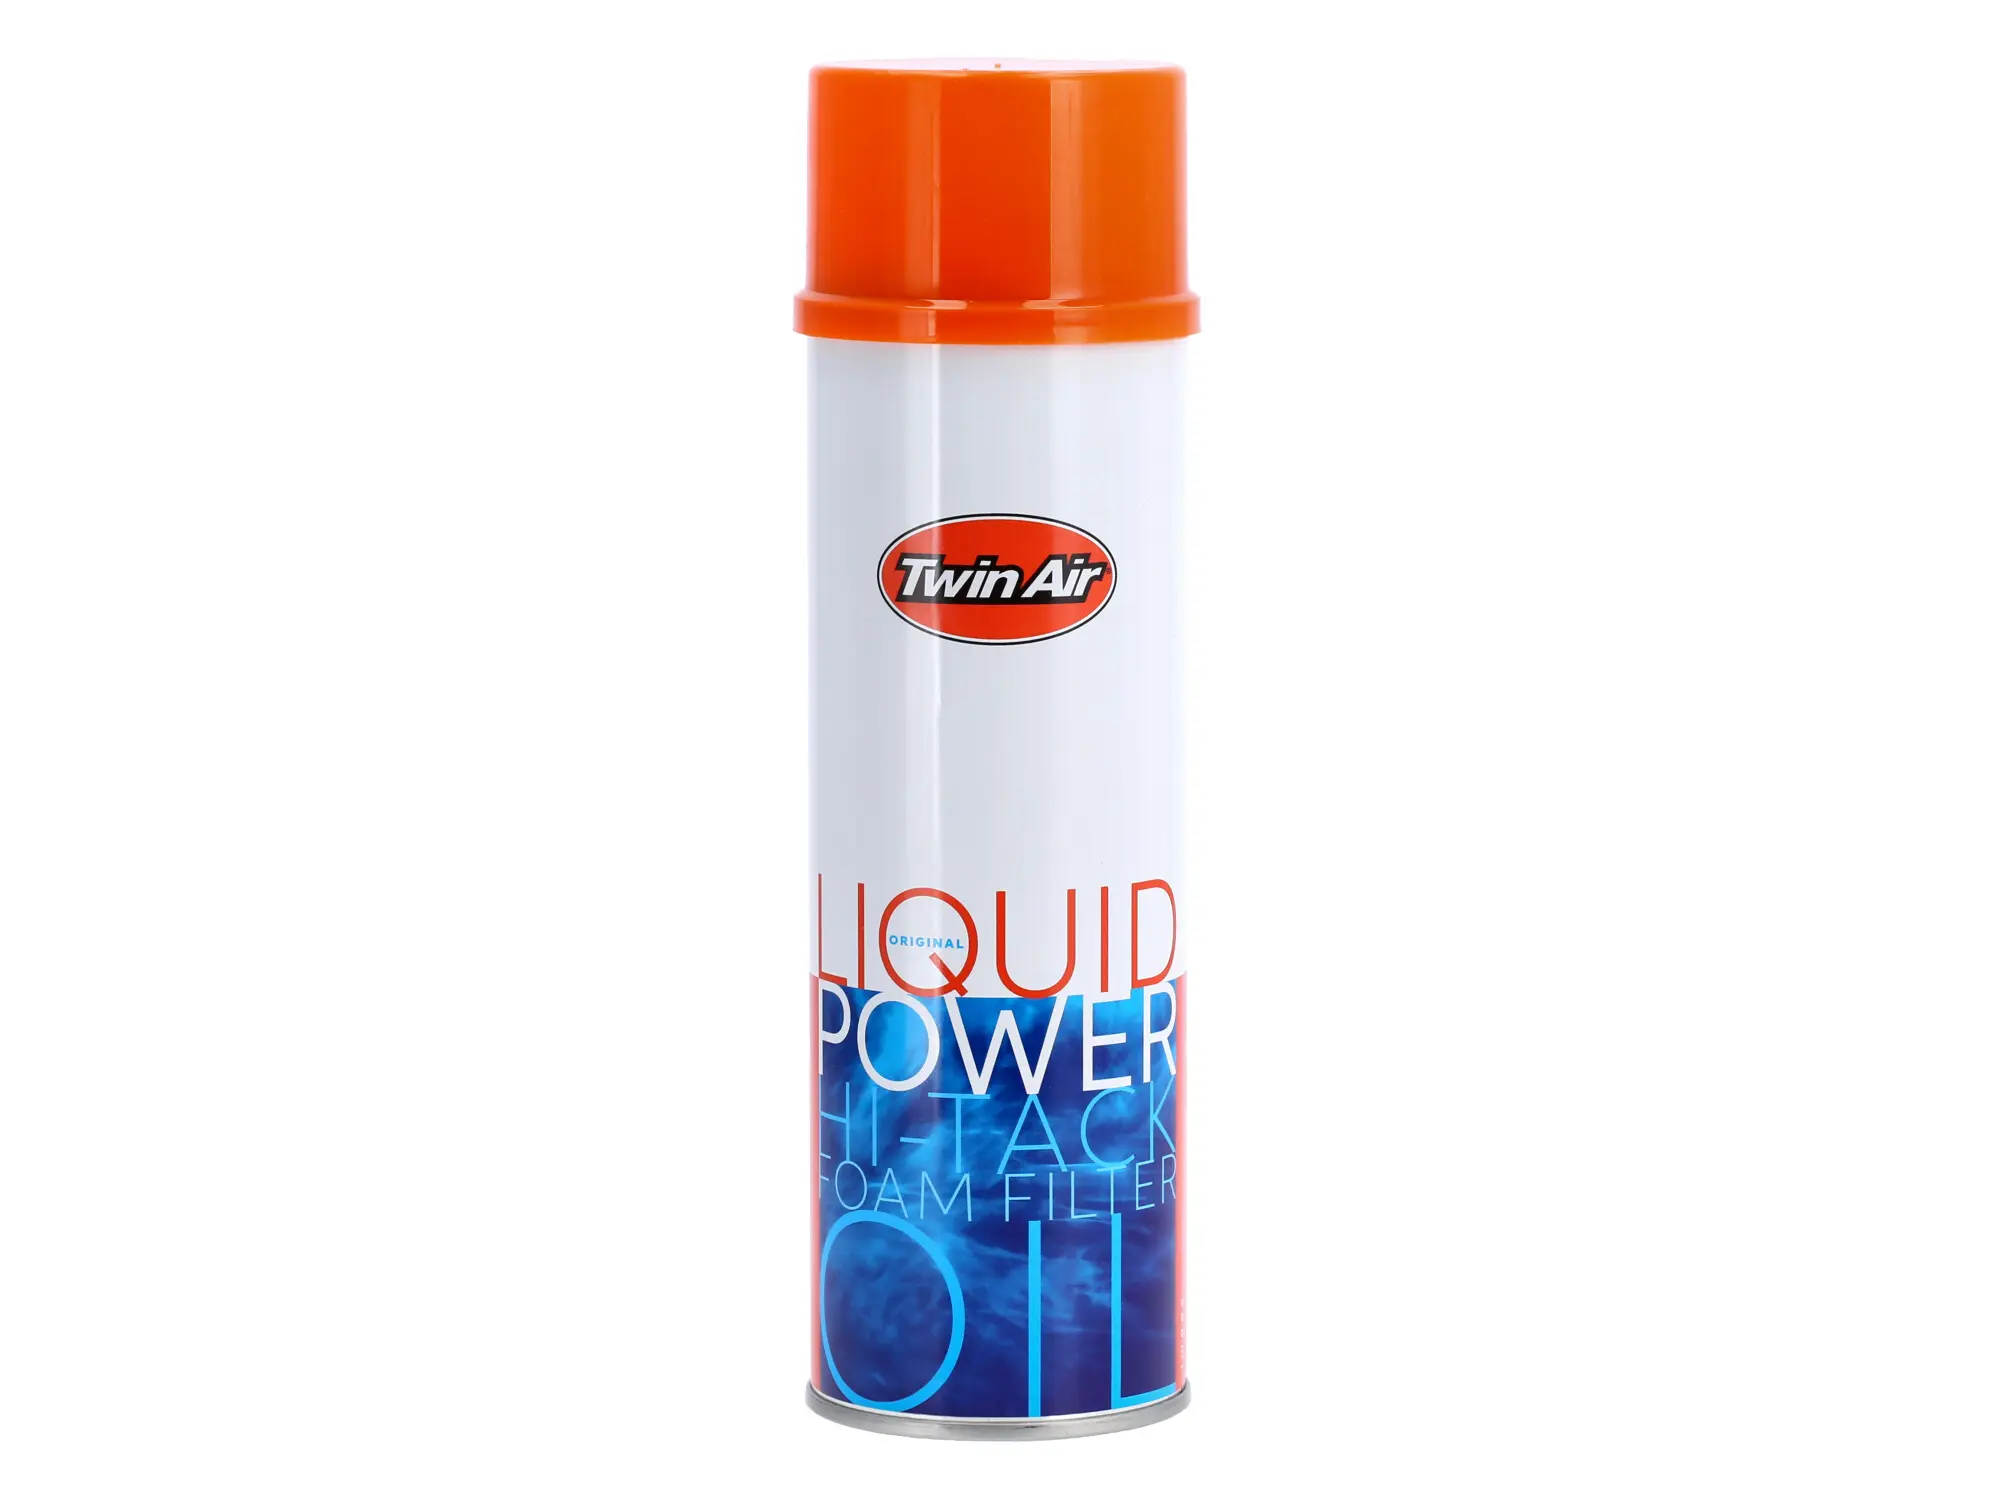 Luftfilteröl "TwinAir" Liquid Power Spray - 500ml, Art.-Nr.: 10077935 - Bild 1